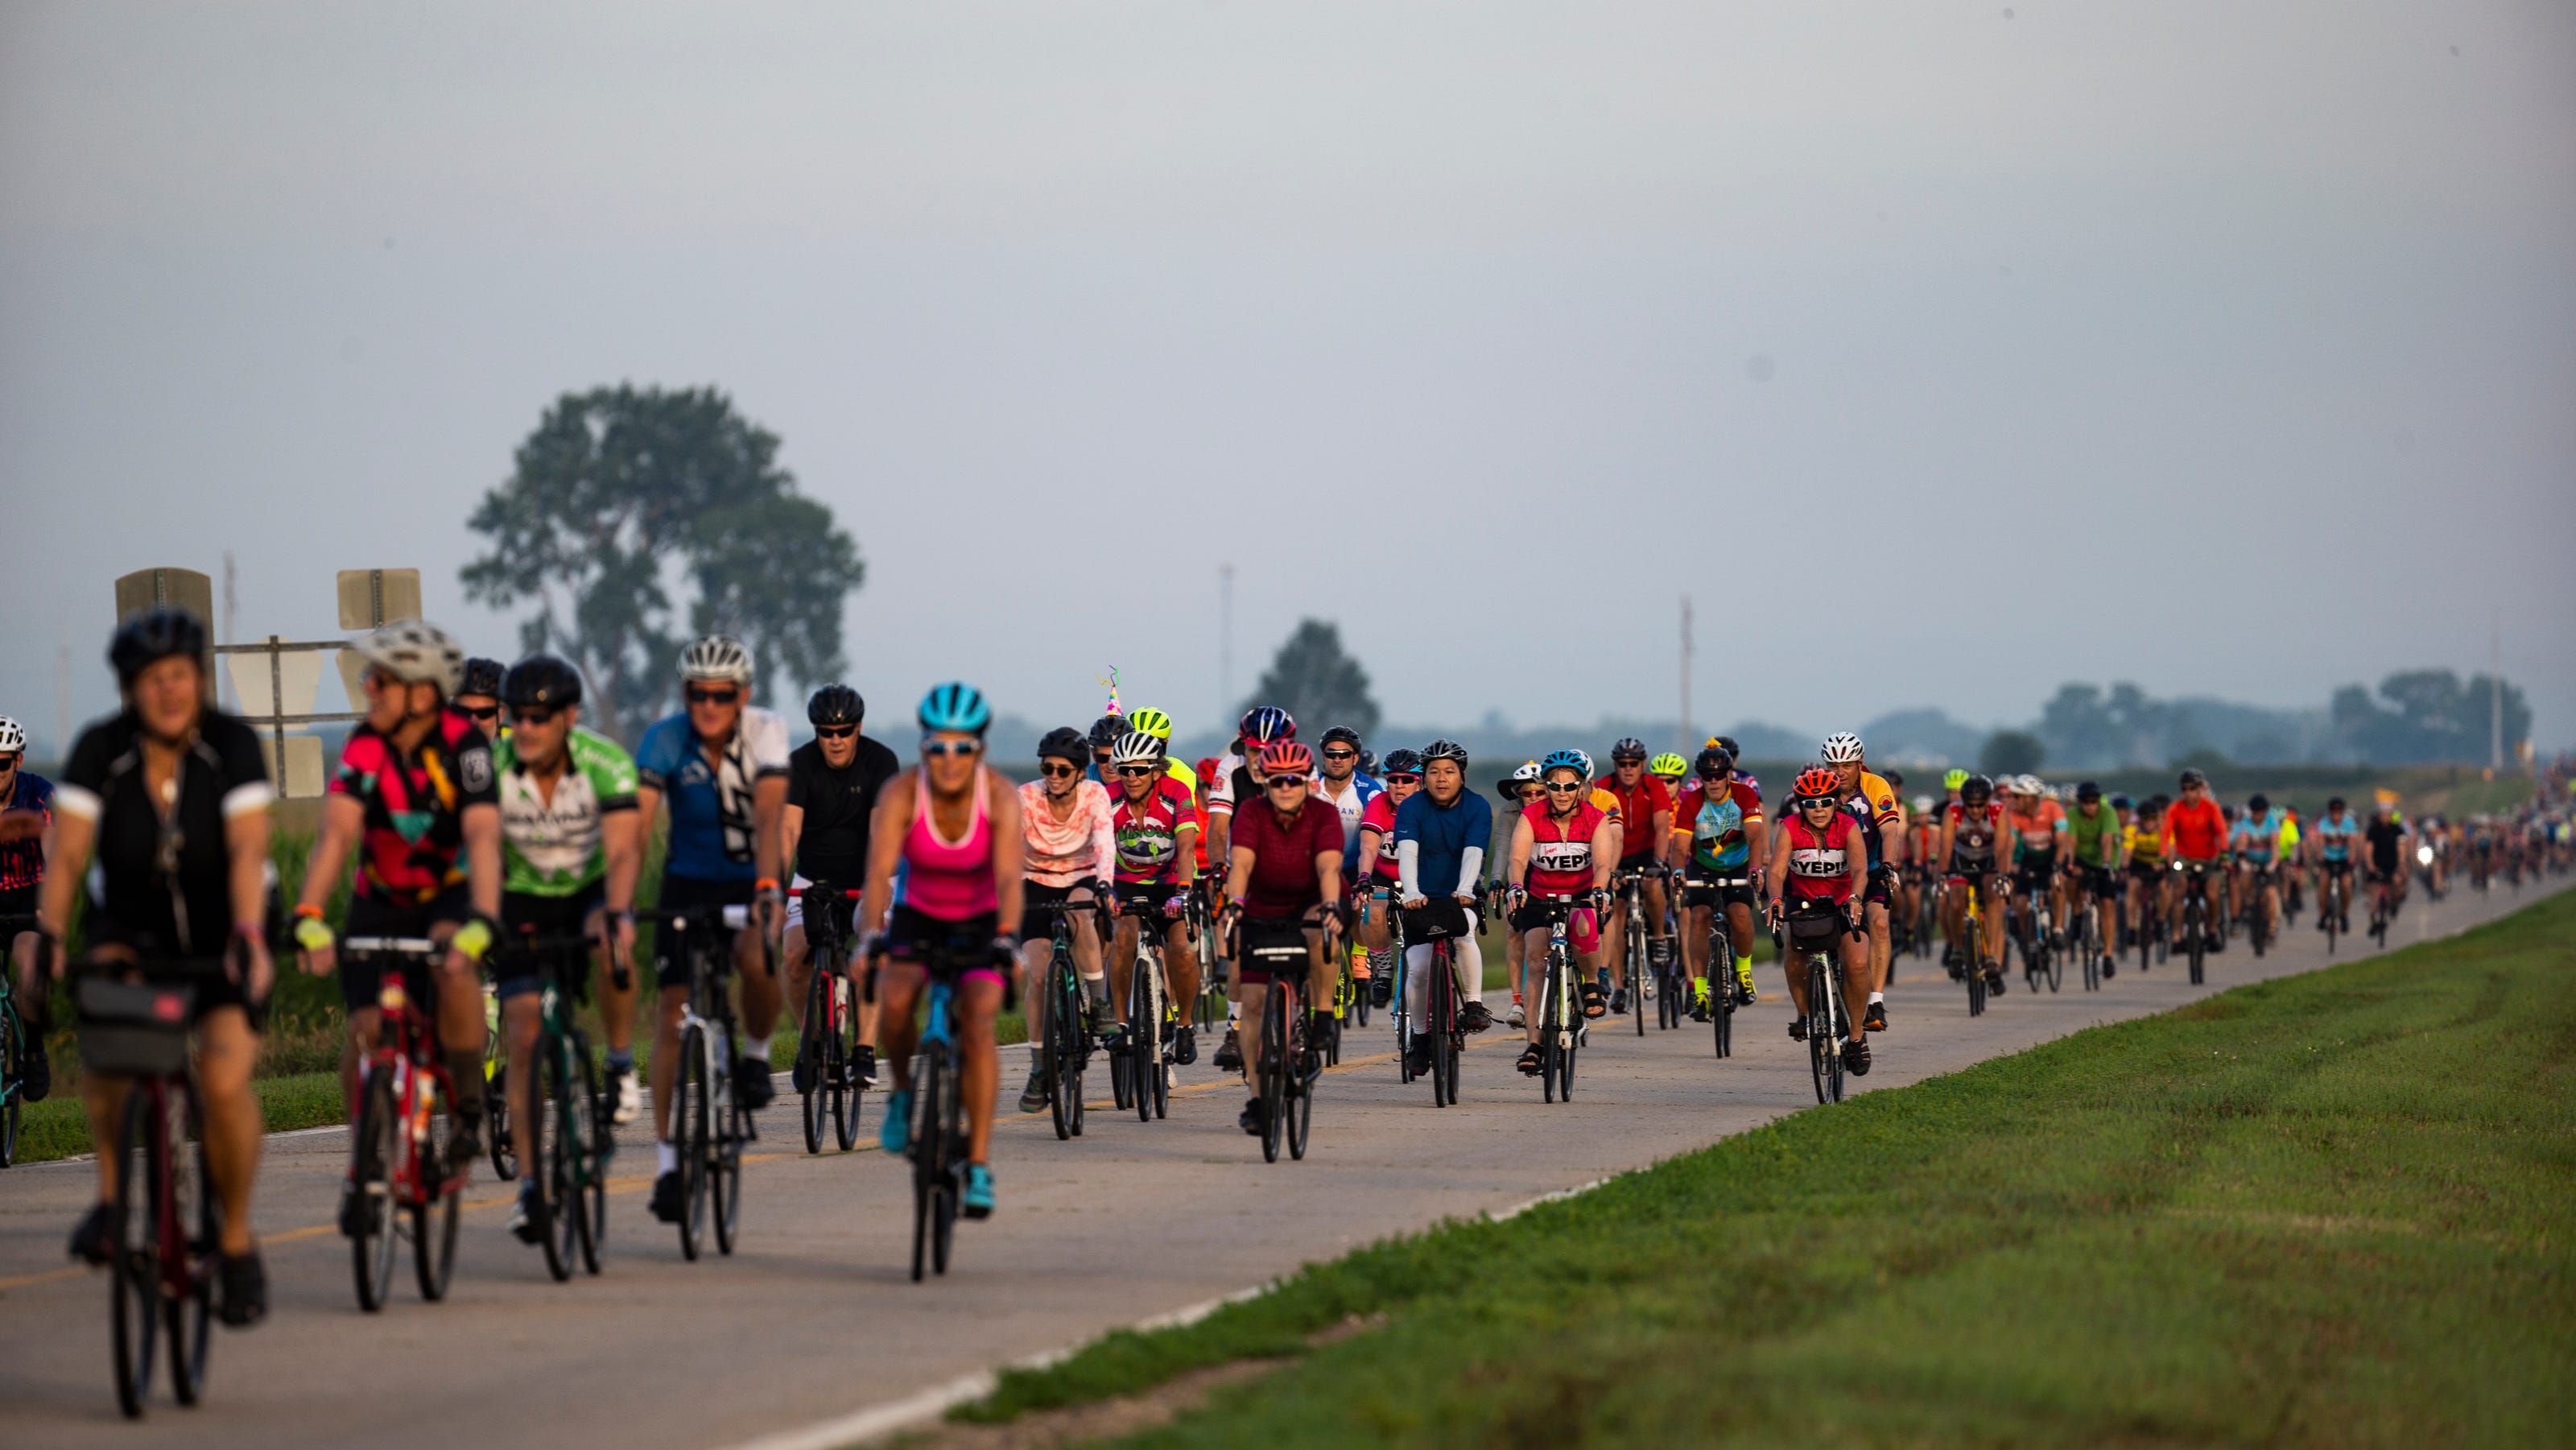 Day 1 of RAGBRAI 2022 starts with 18,000 registered bike riders